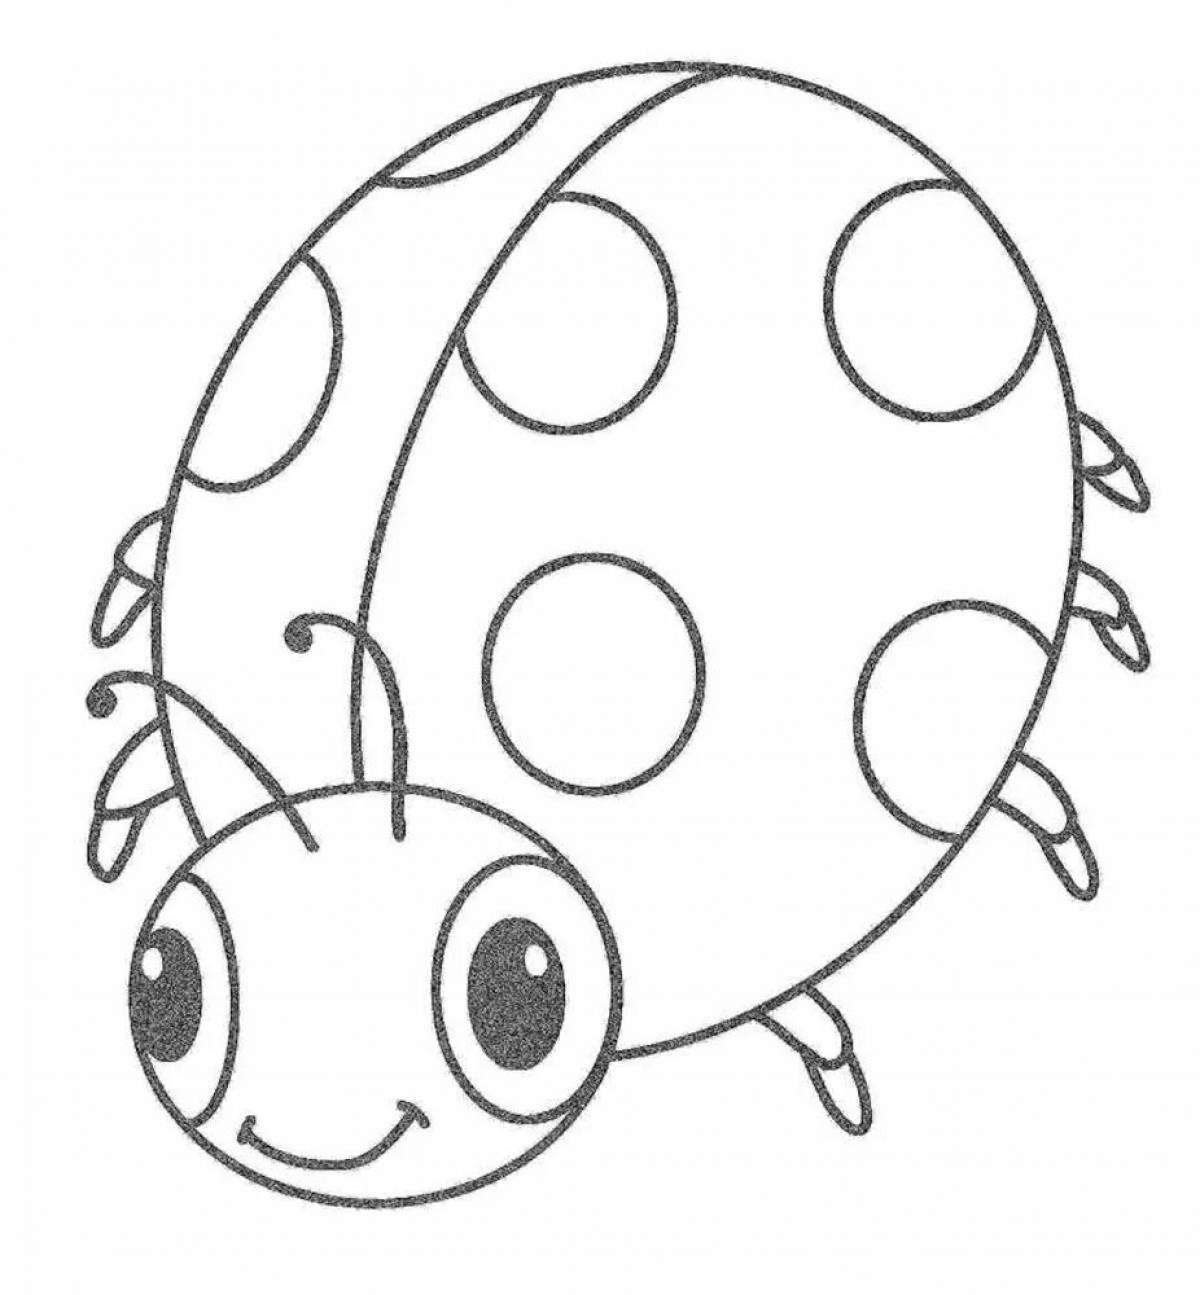 Fancy ladybug coloring book for kids